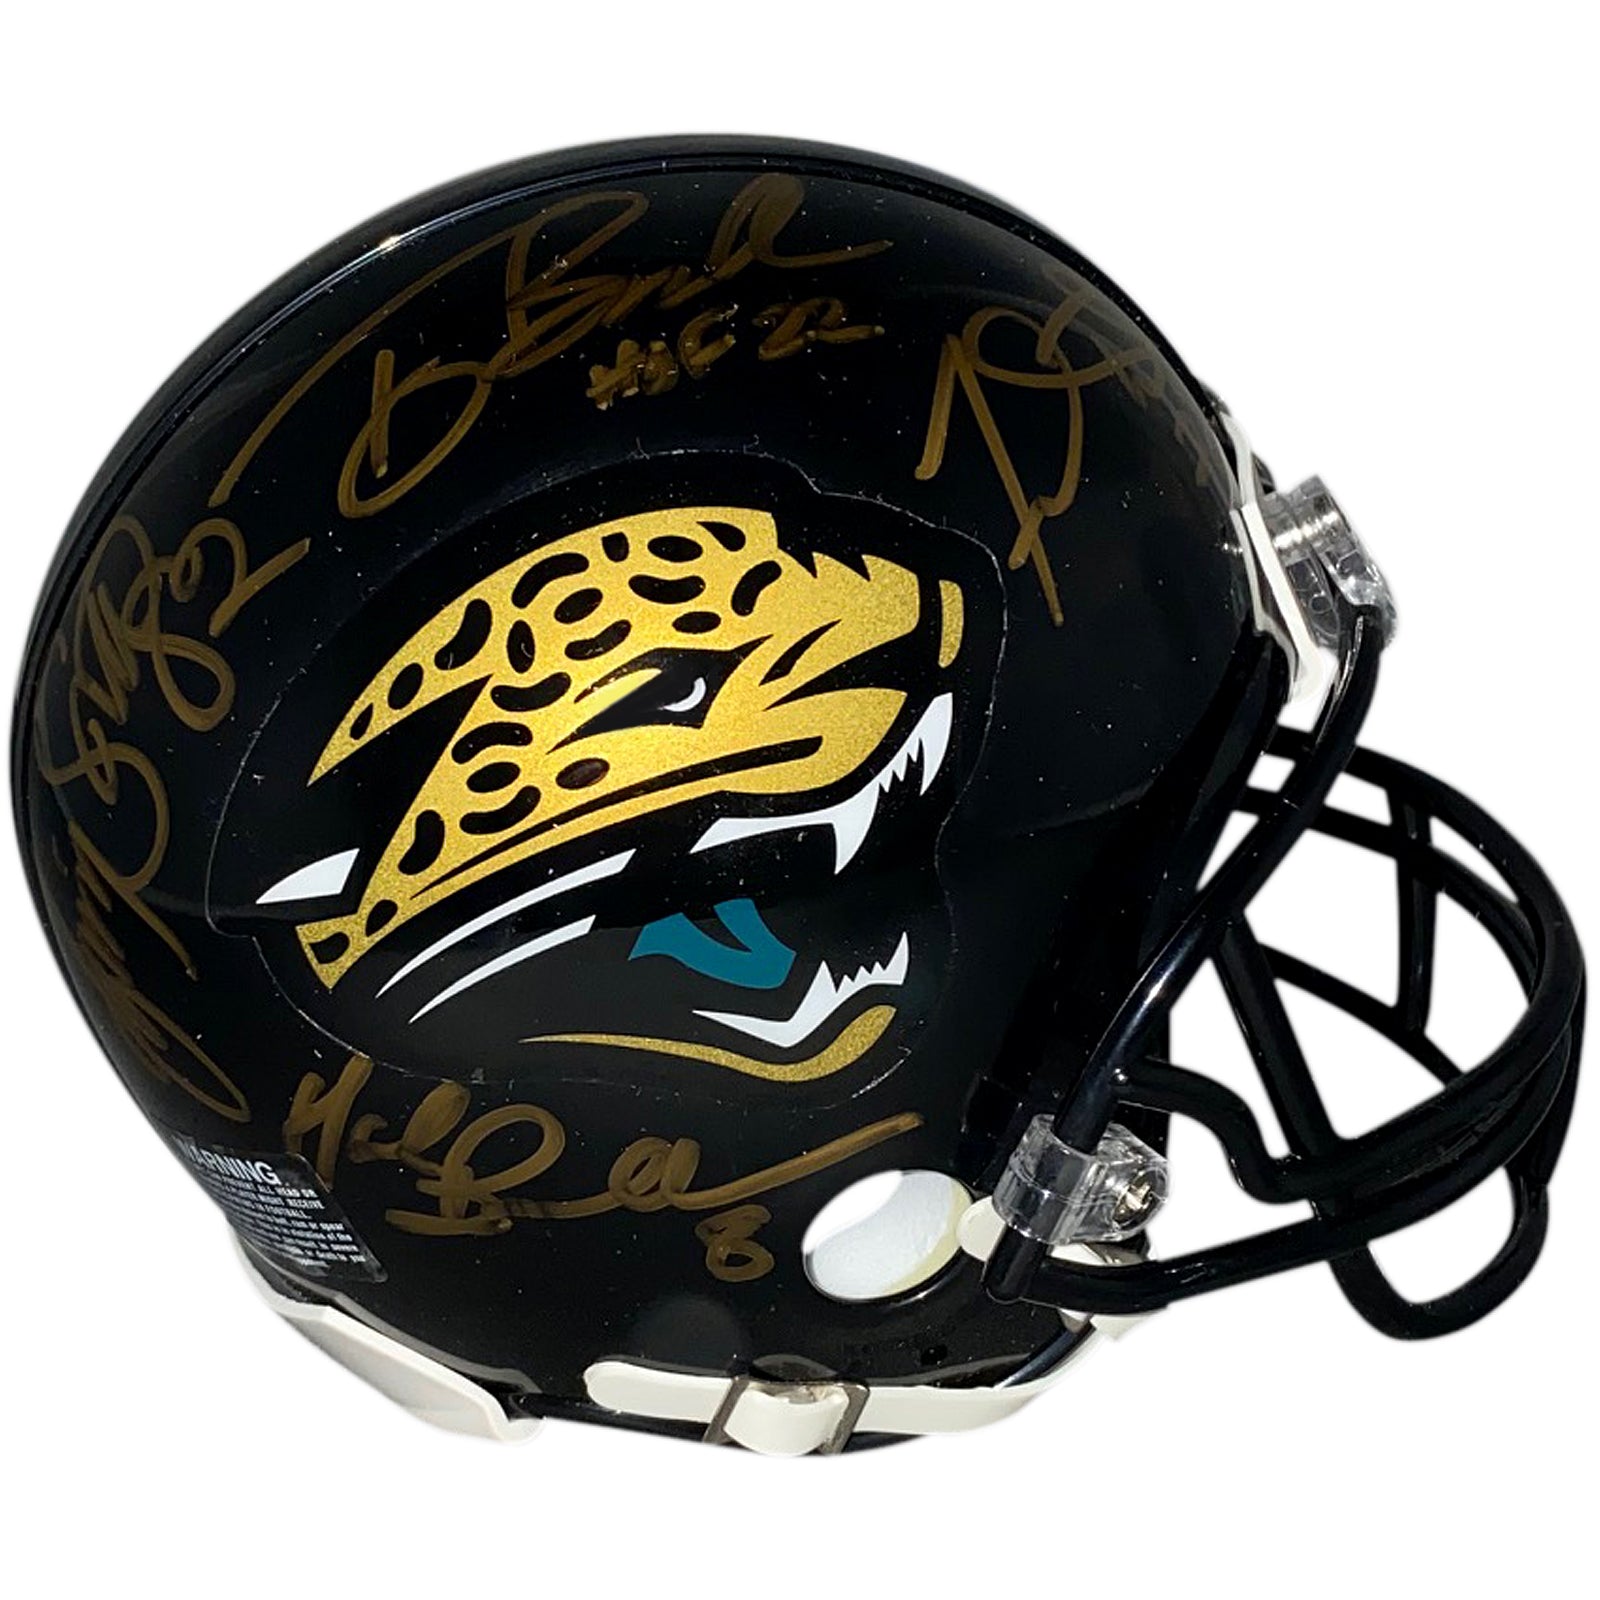 Tony Boselli , Mark Brunell , Jimmy Smith And Fred Taylor Autographed Jacksonville Jaguars Mini Helmet - Pride of the Jaguars